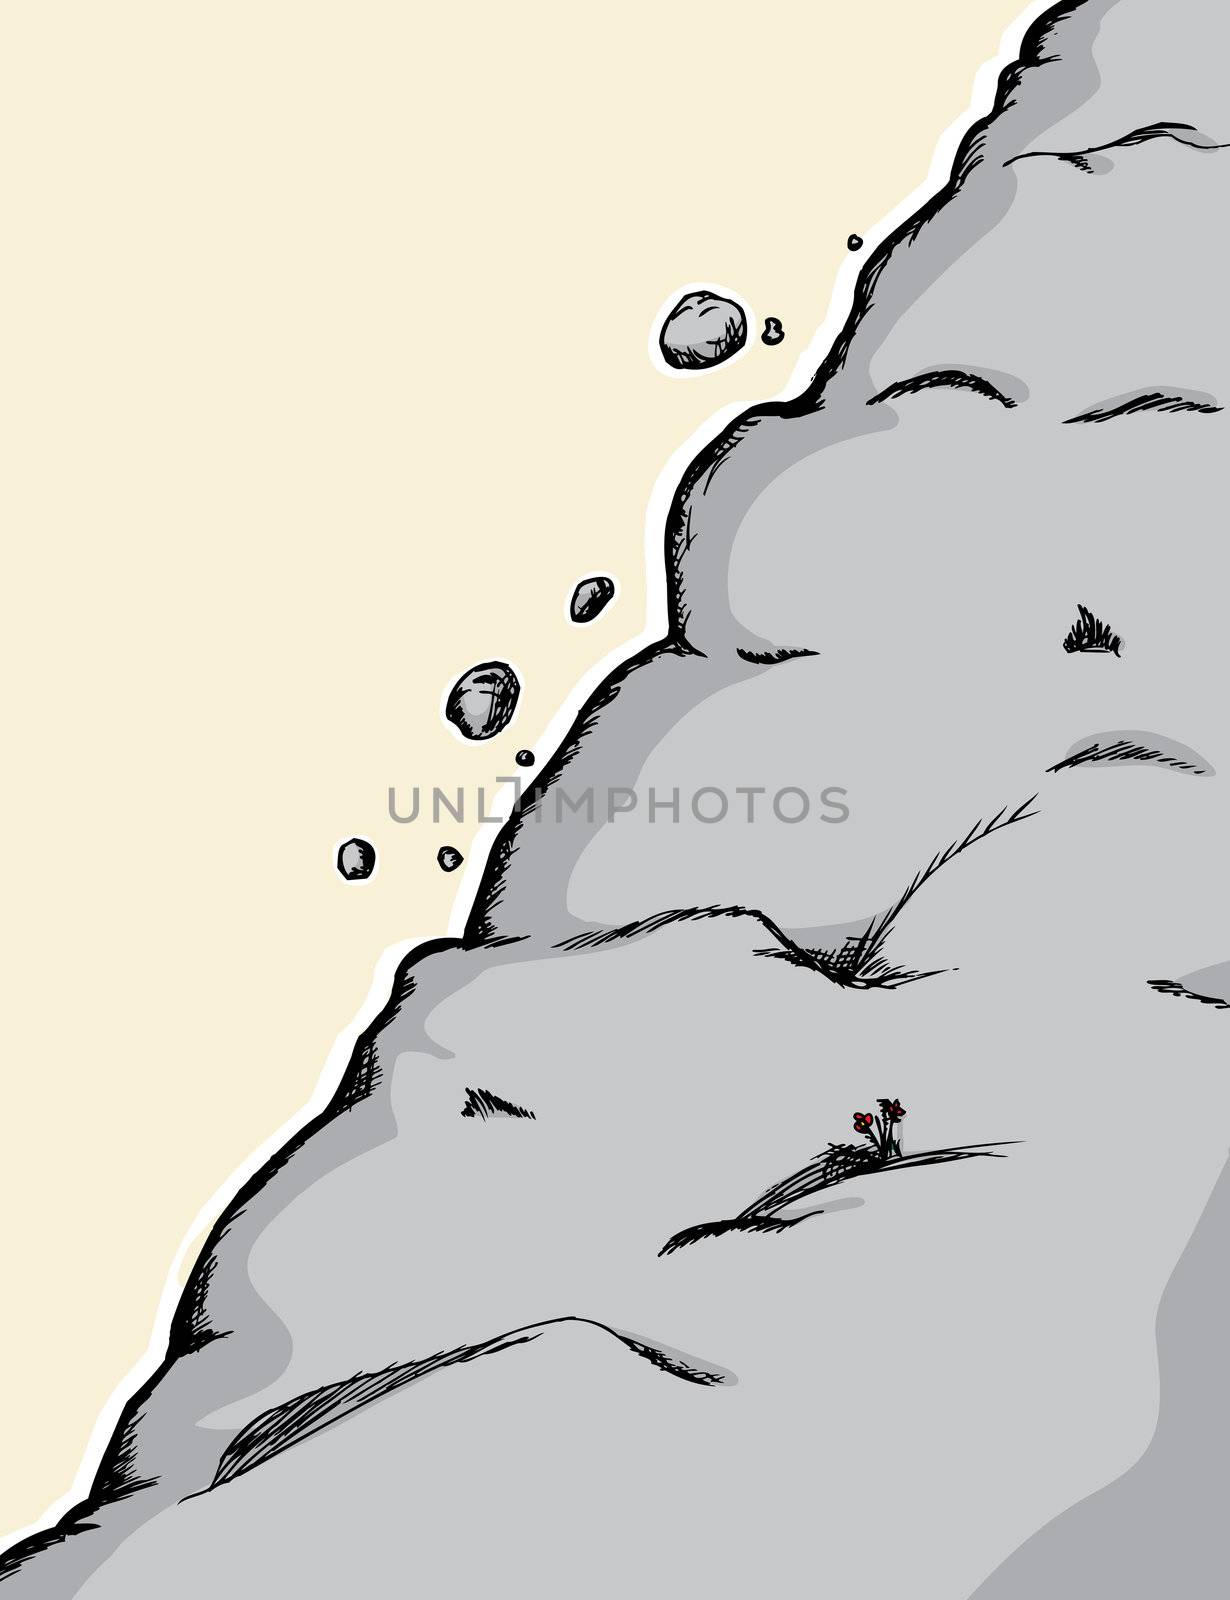 Falling Rocks by TheBlackRhino